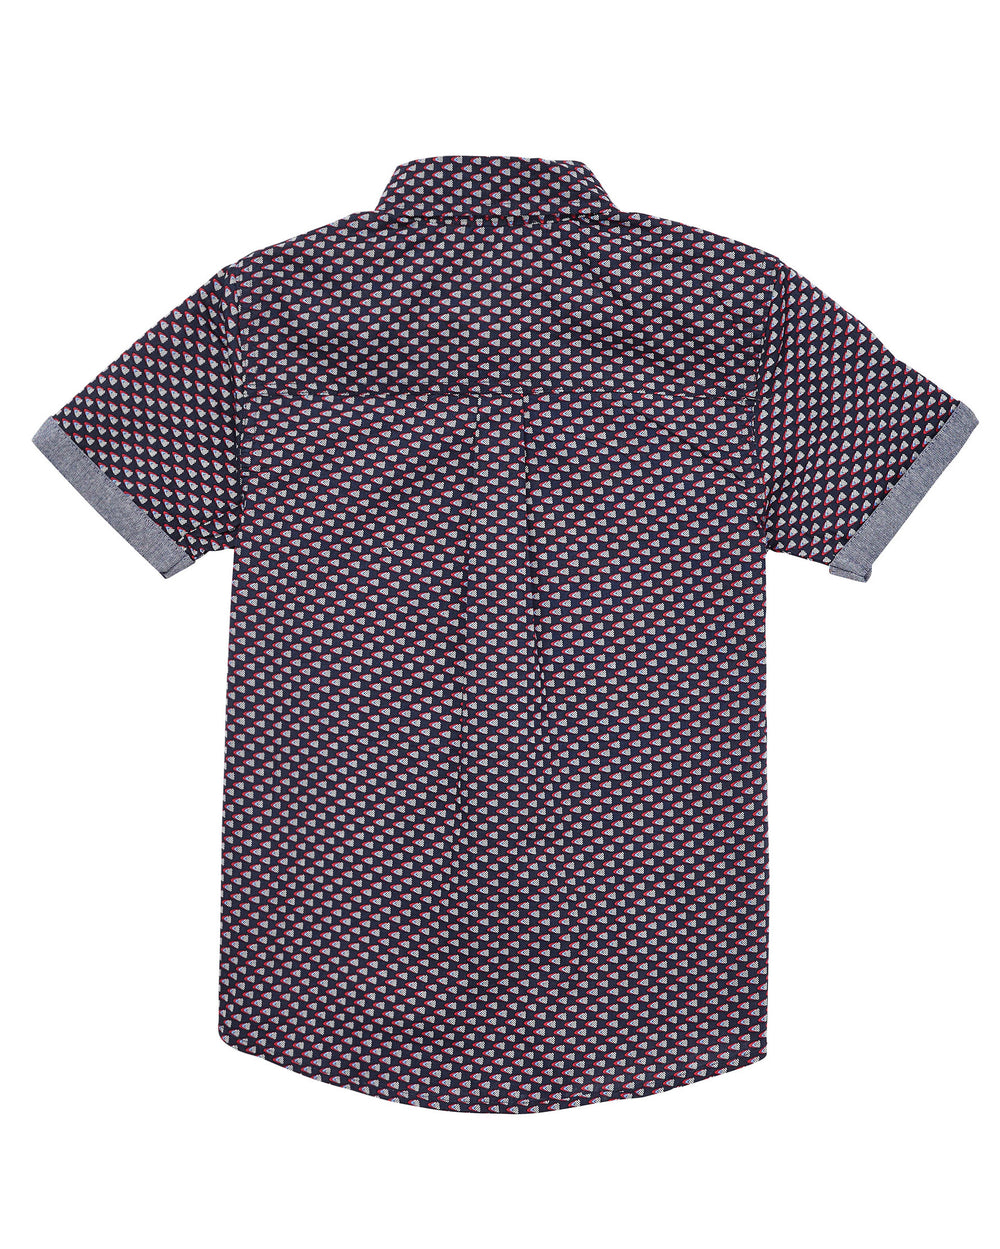 Boys' Navy Short-Sleeve Button-Down Shirt (Sizes 8-18)